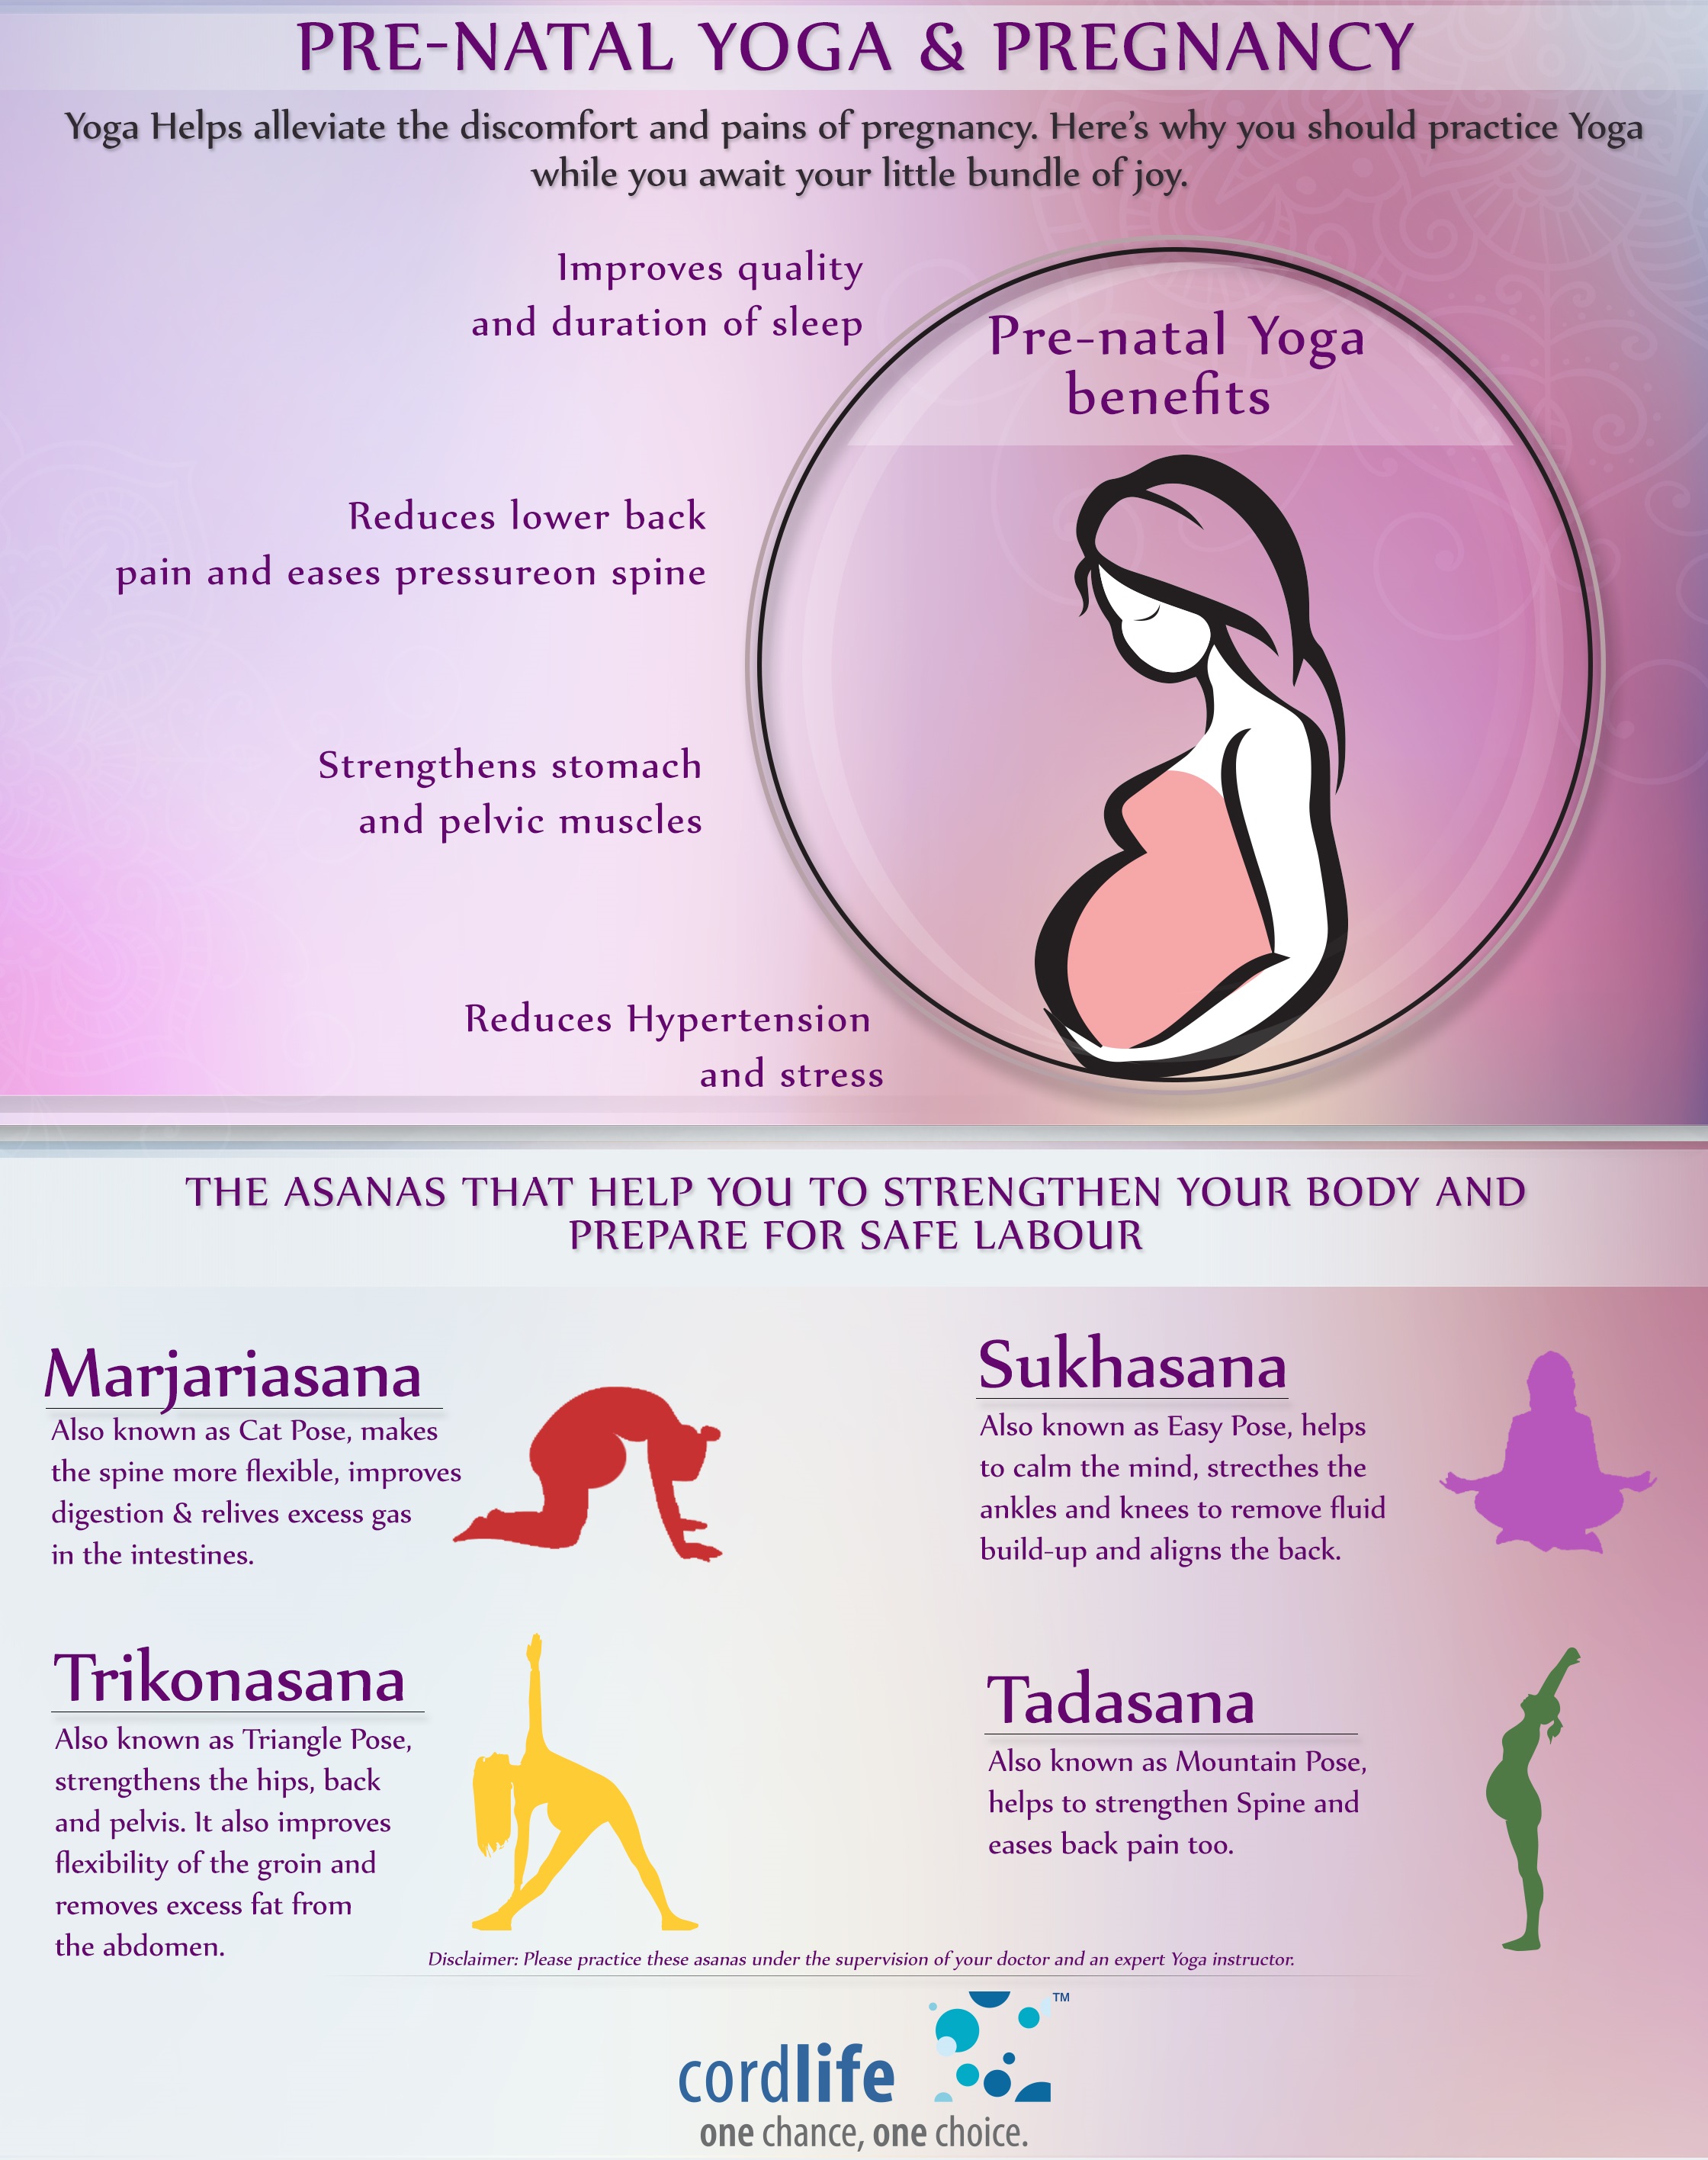 10 Yoga Pose Modifications For Pregnancy | Pregnancy workout videos, Pregnancy  yoga, Pregnancy safe workouts